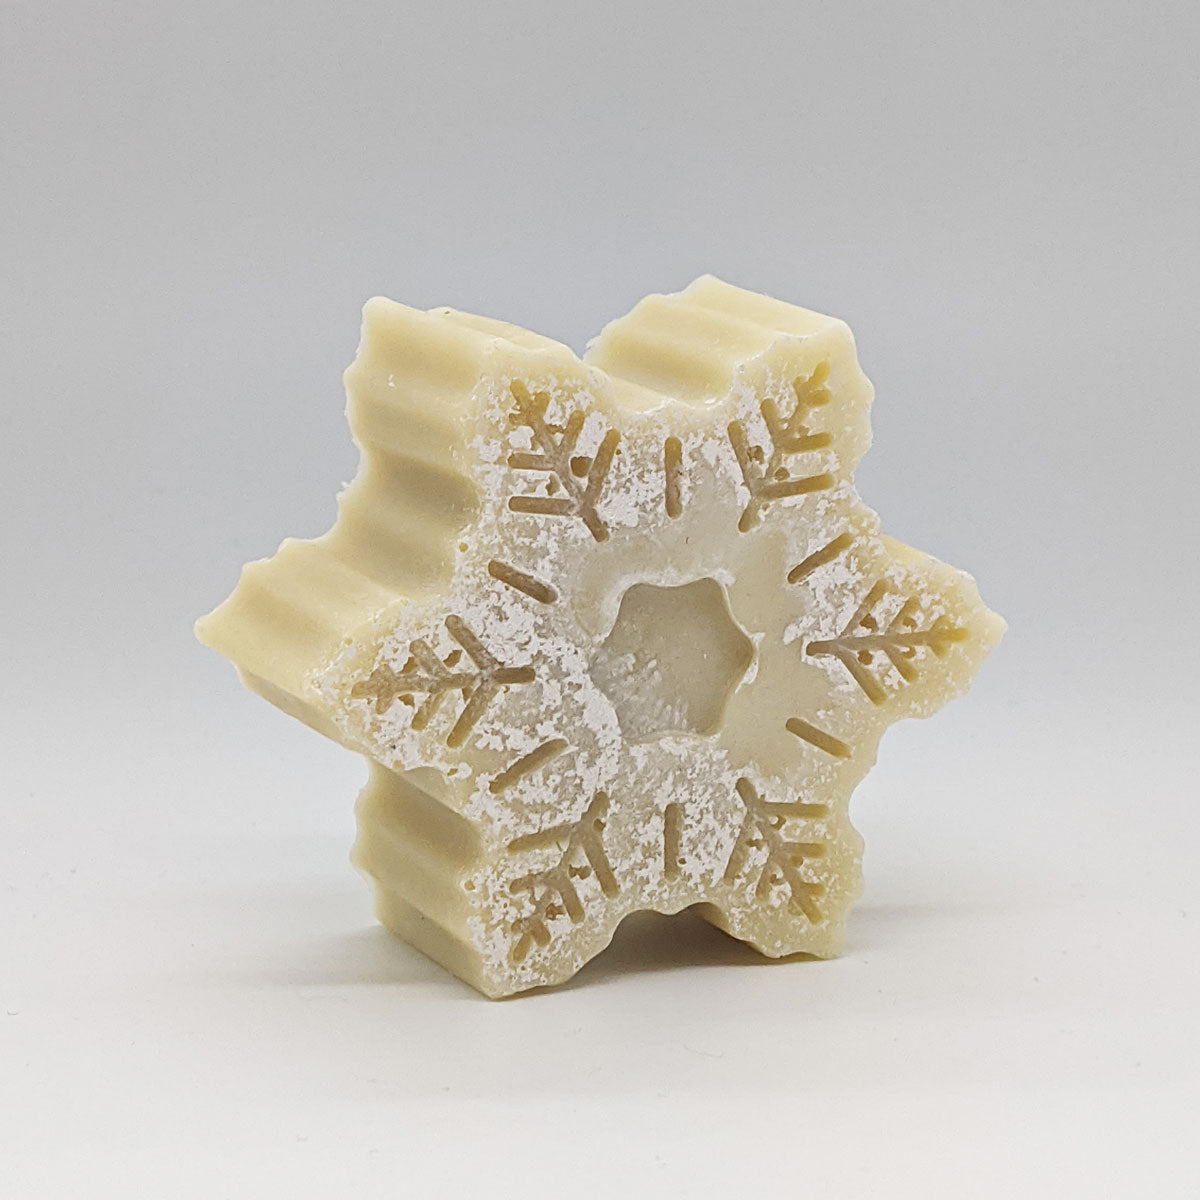 snowflake soap plastic free zero waste fir needle peppermint vanilla